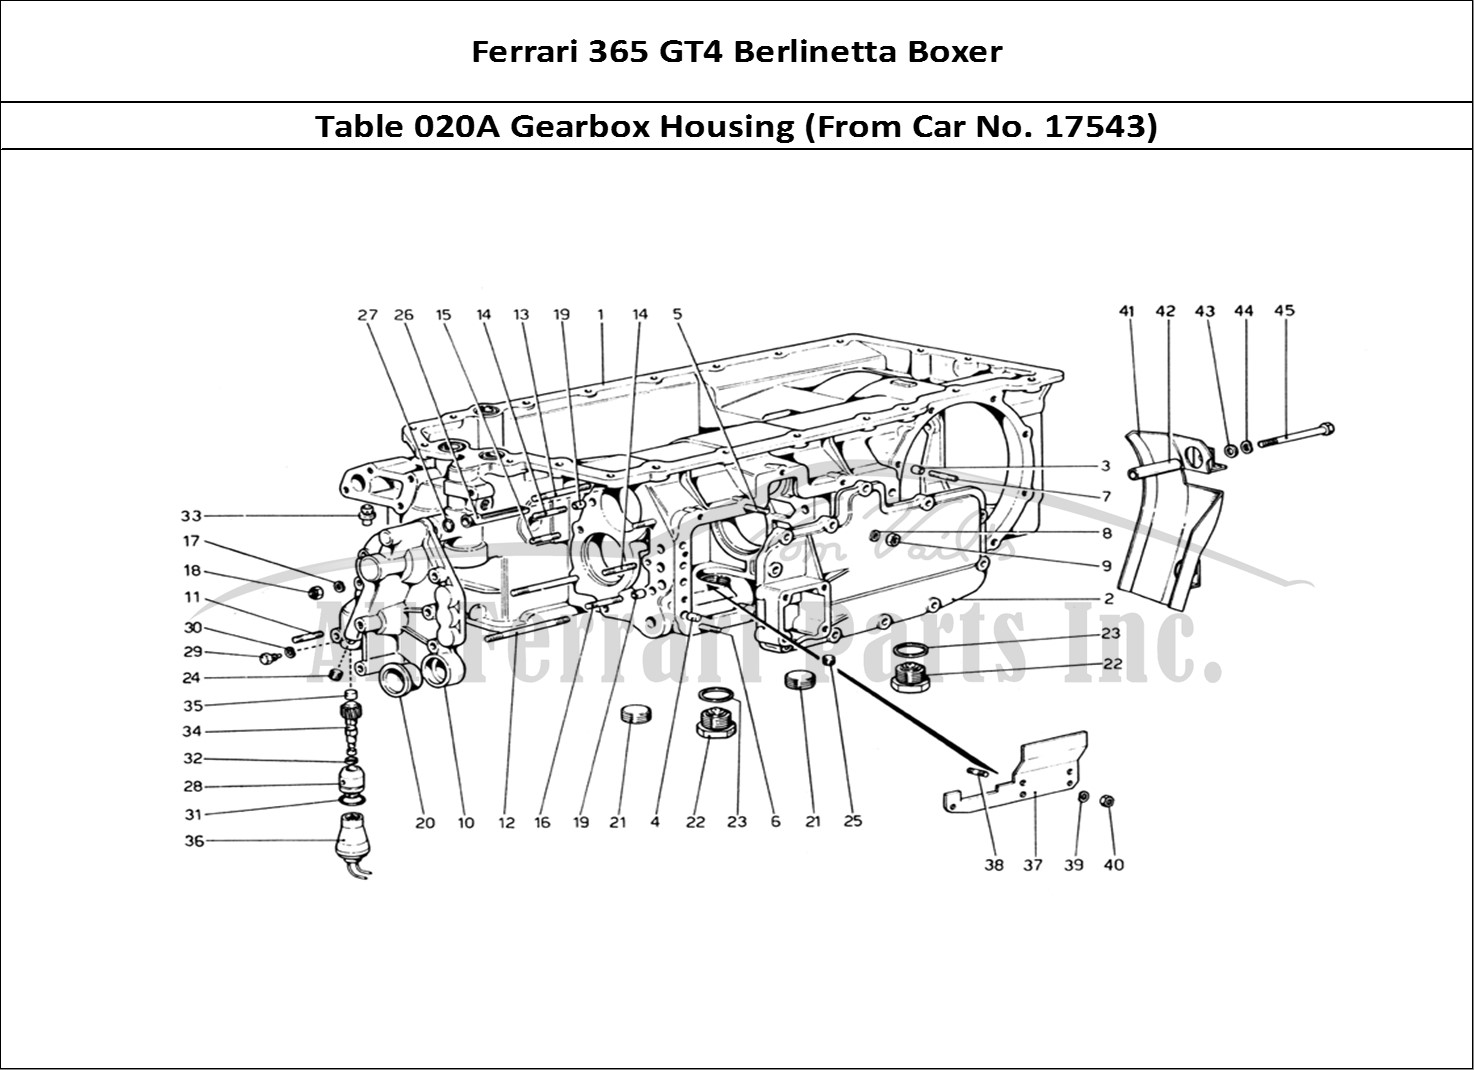 Ferrari Parts Ferrari 365 GT4 Berlinetta Boxer Page 020 Gearbox (From Car No. 175